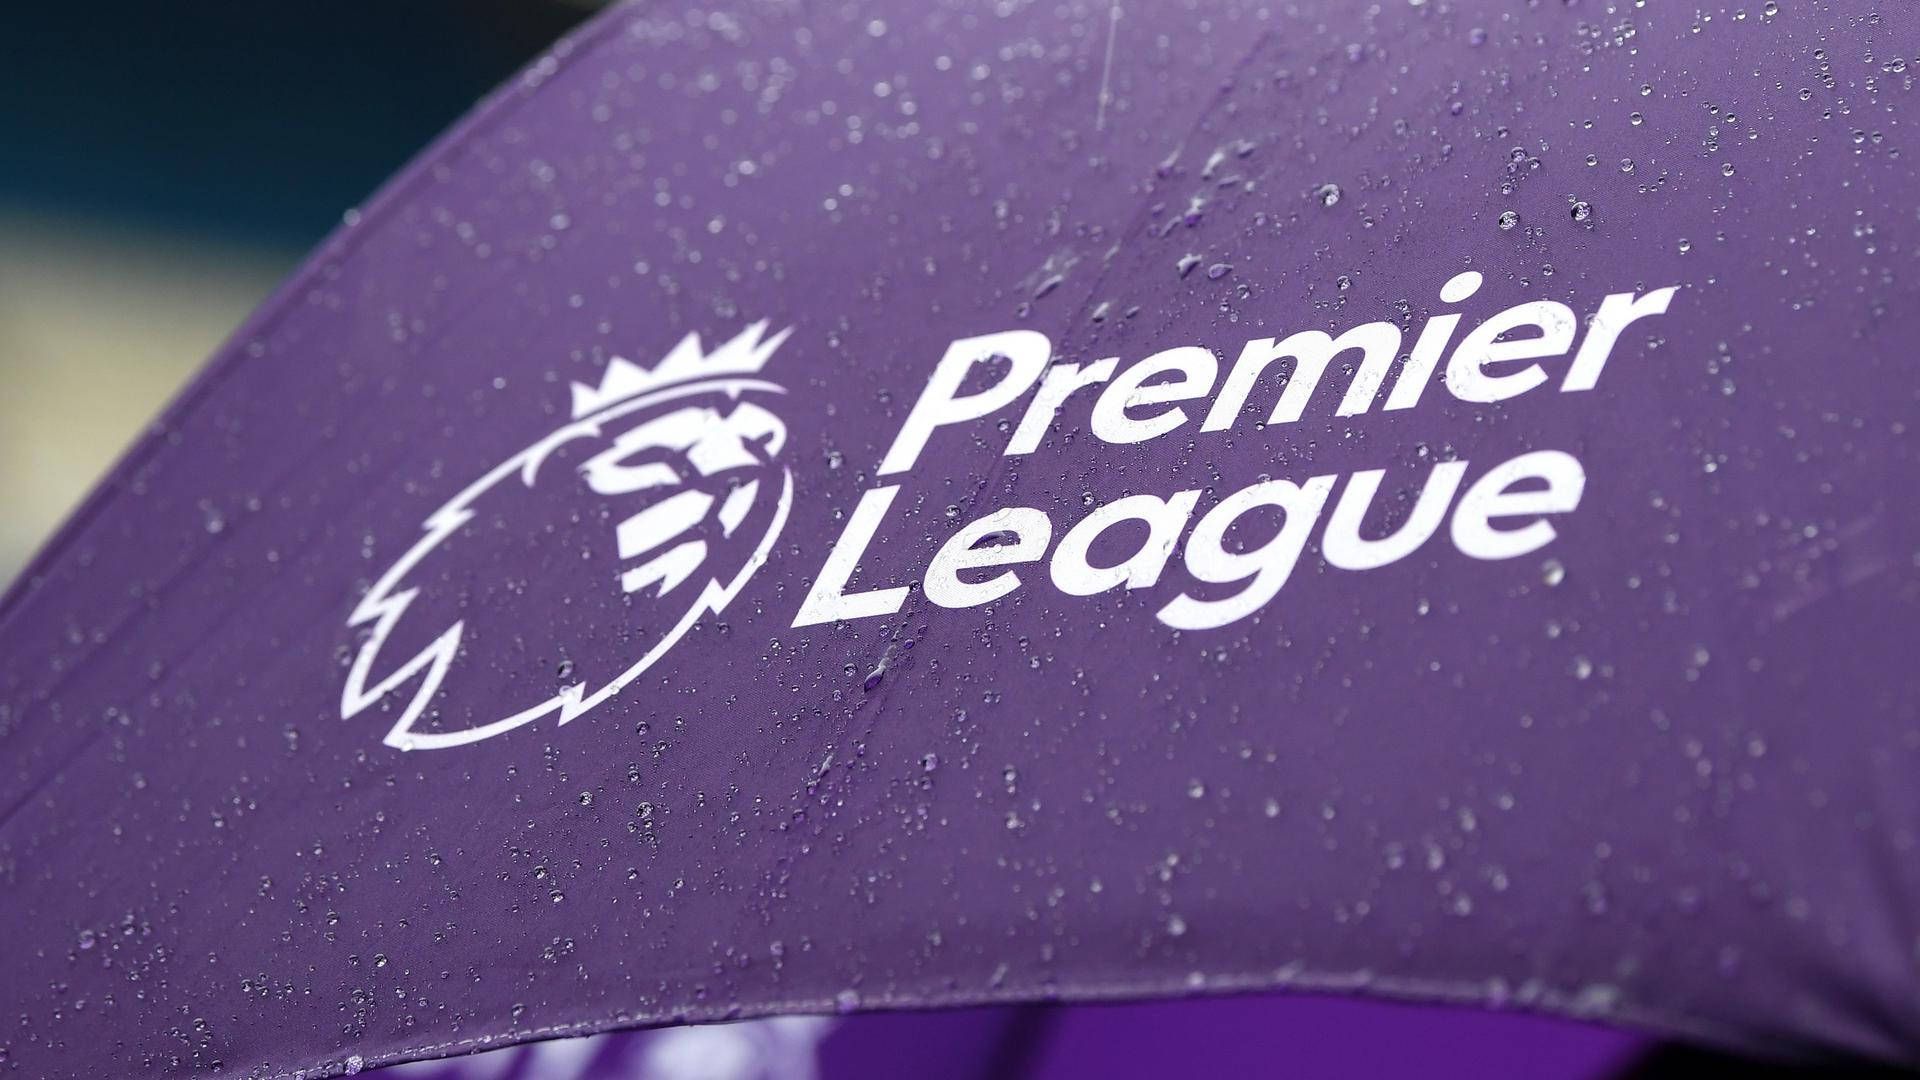 Premier League On Umbrella Wallpaper